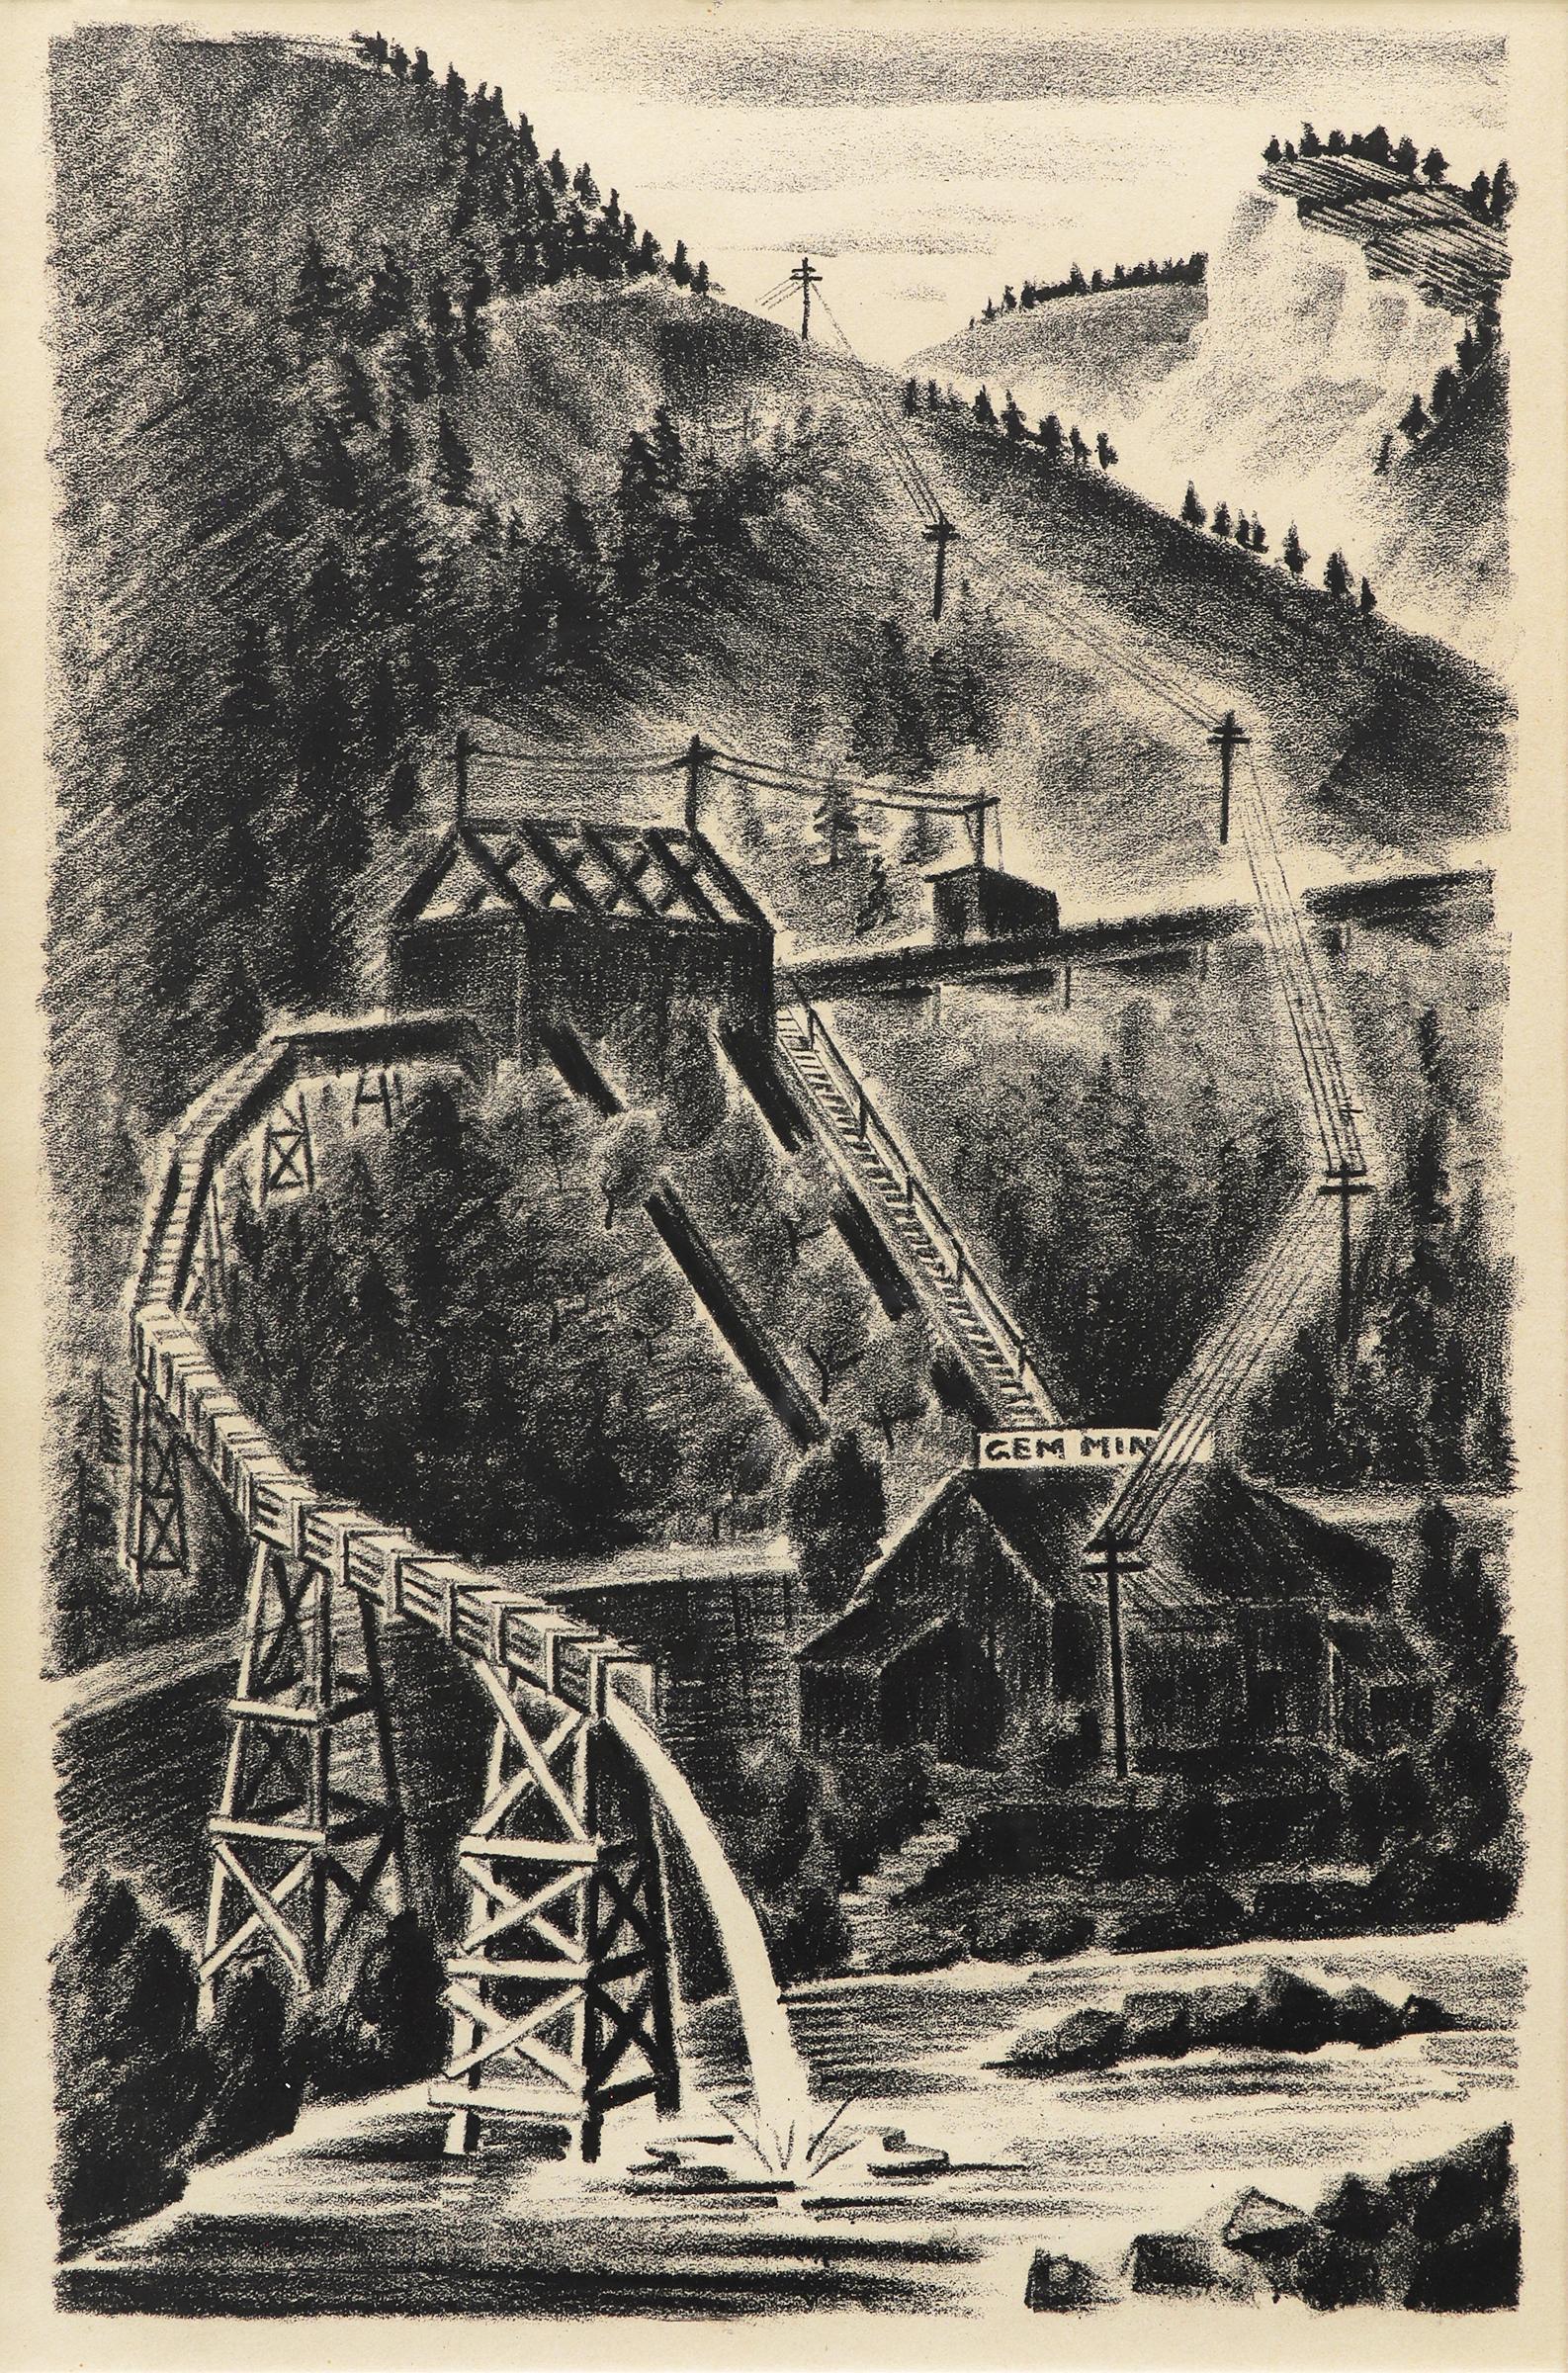 Gem Mining Company, Colorado Landscape Mining Scene 1930s Lithograph Print